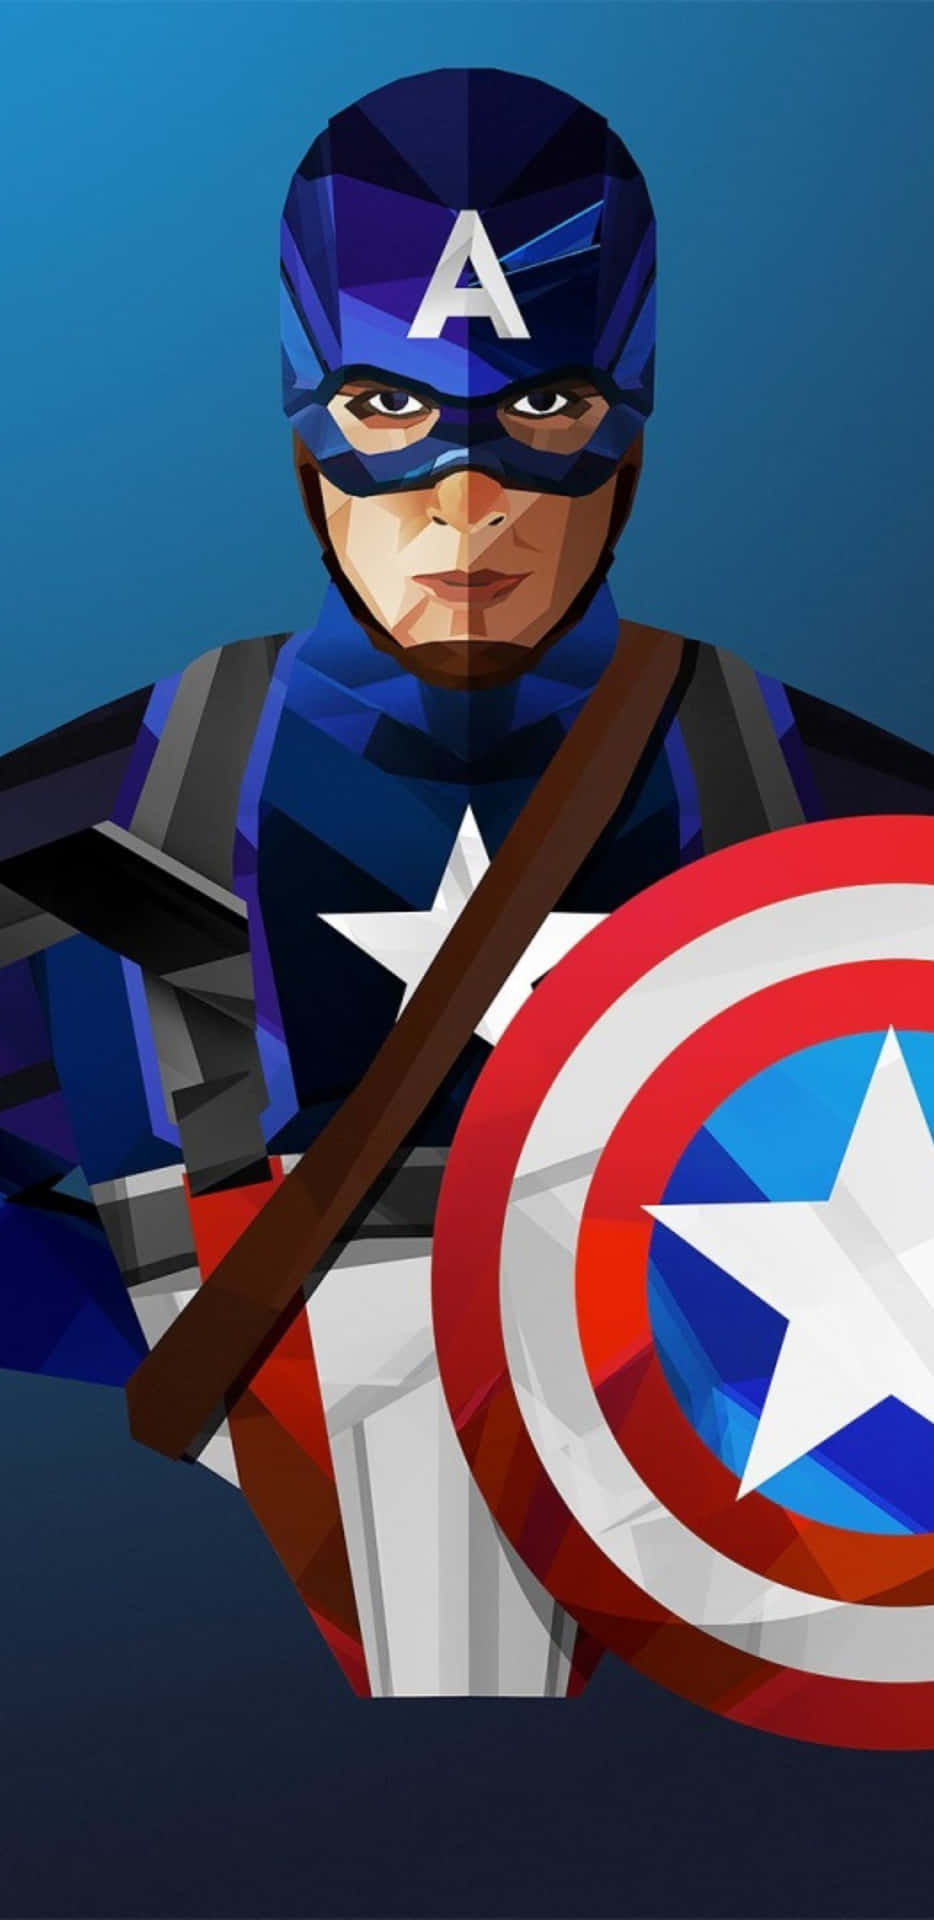 Pixel3xl Captain America Bakgrund Low Poly Konst